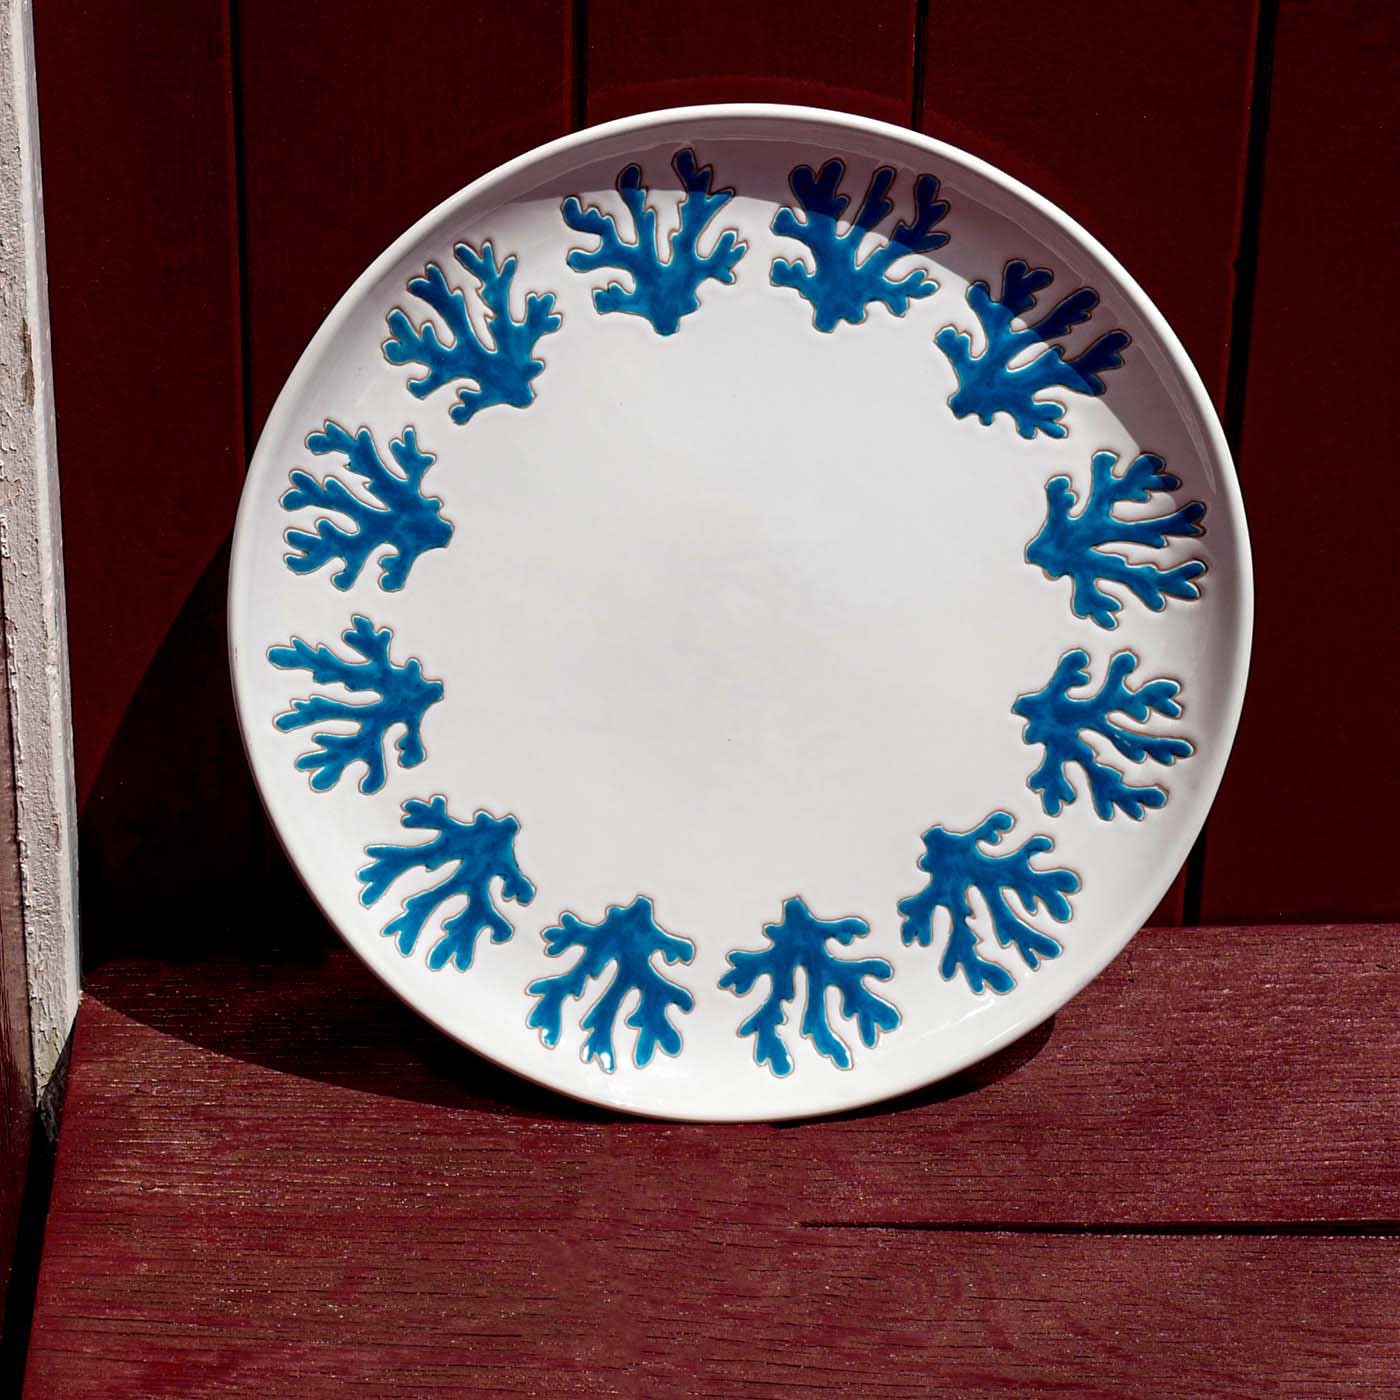 Corallo Turquoise Round Dinner Plate - Cerasarda